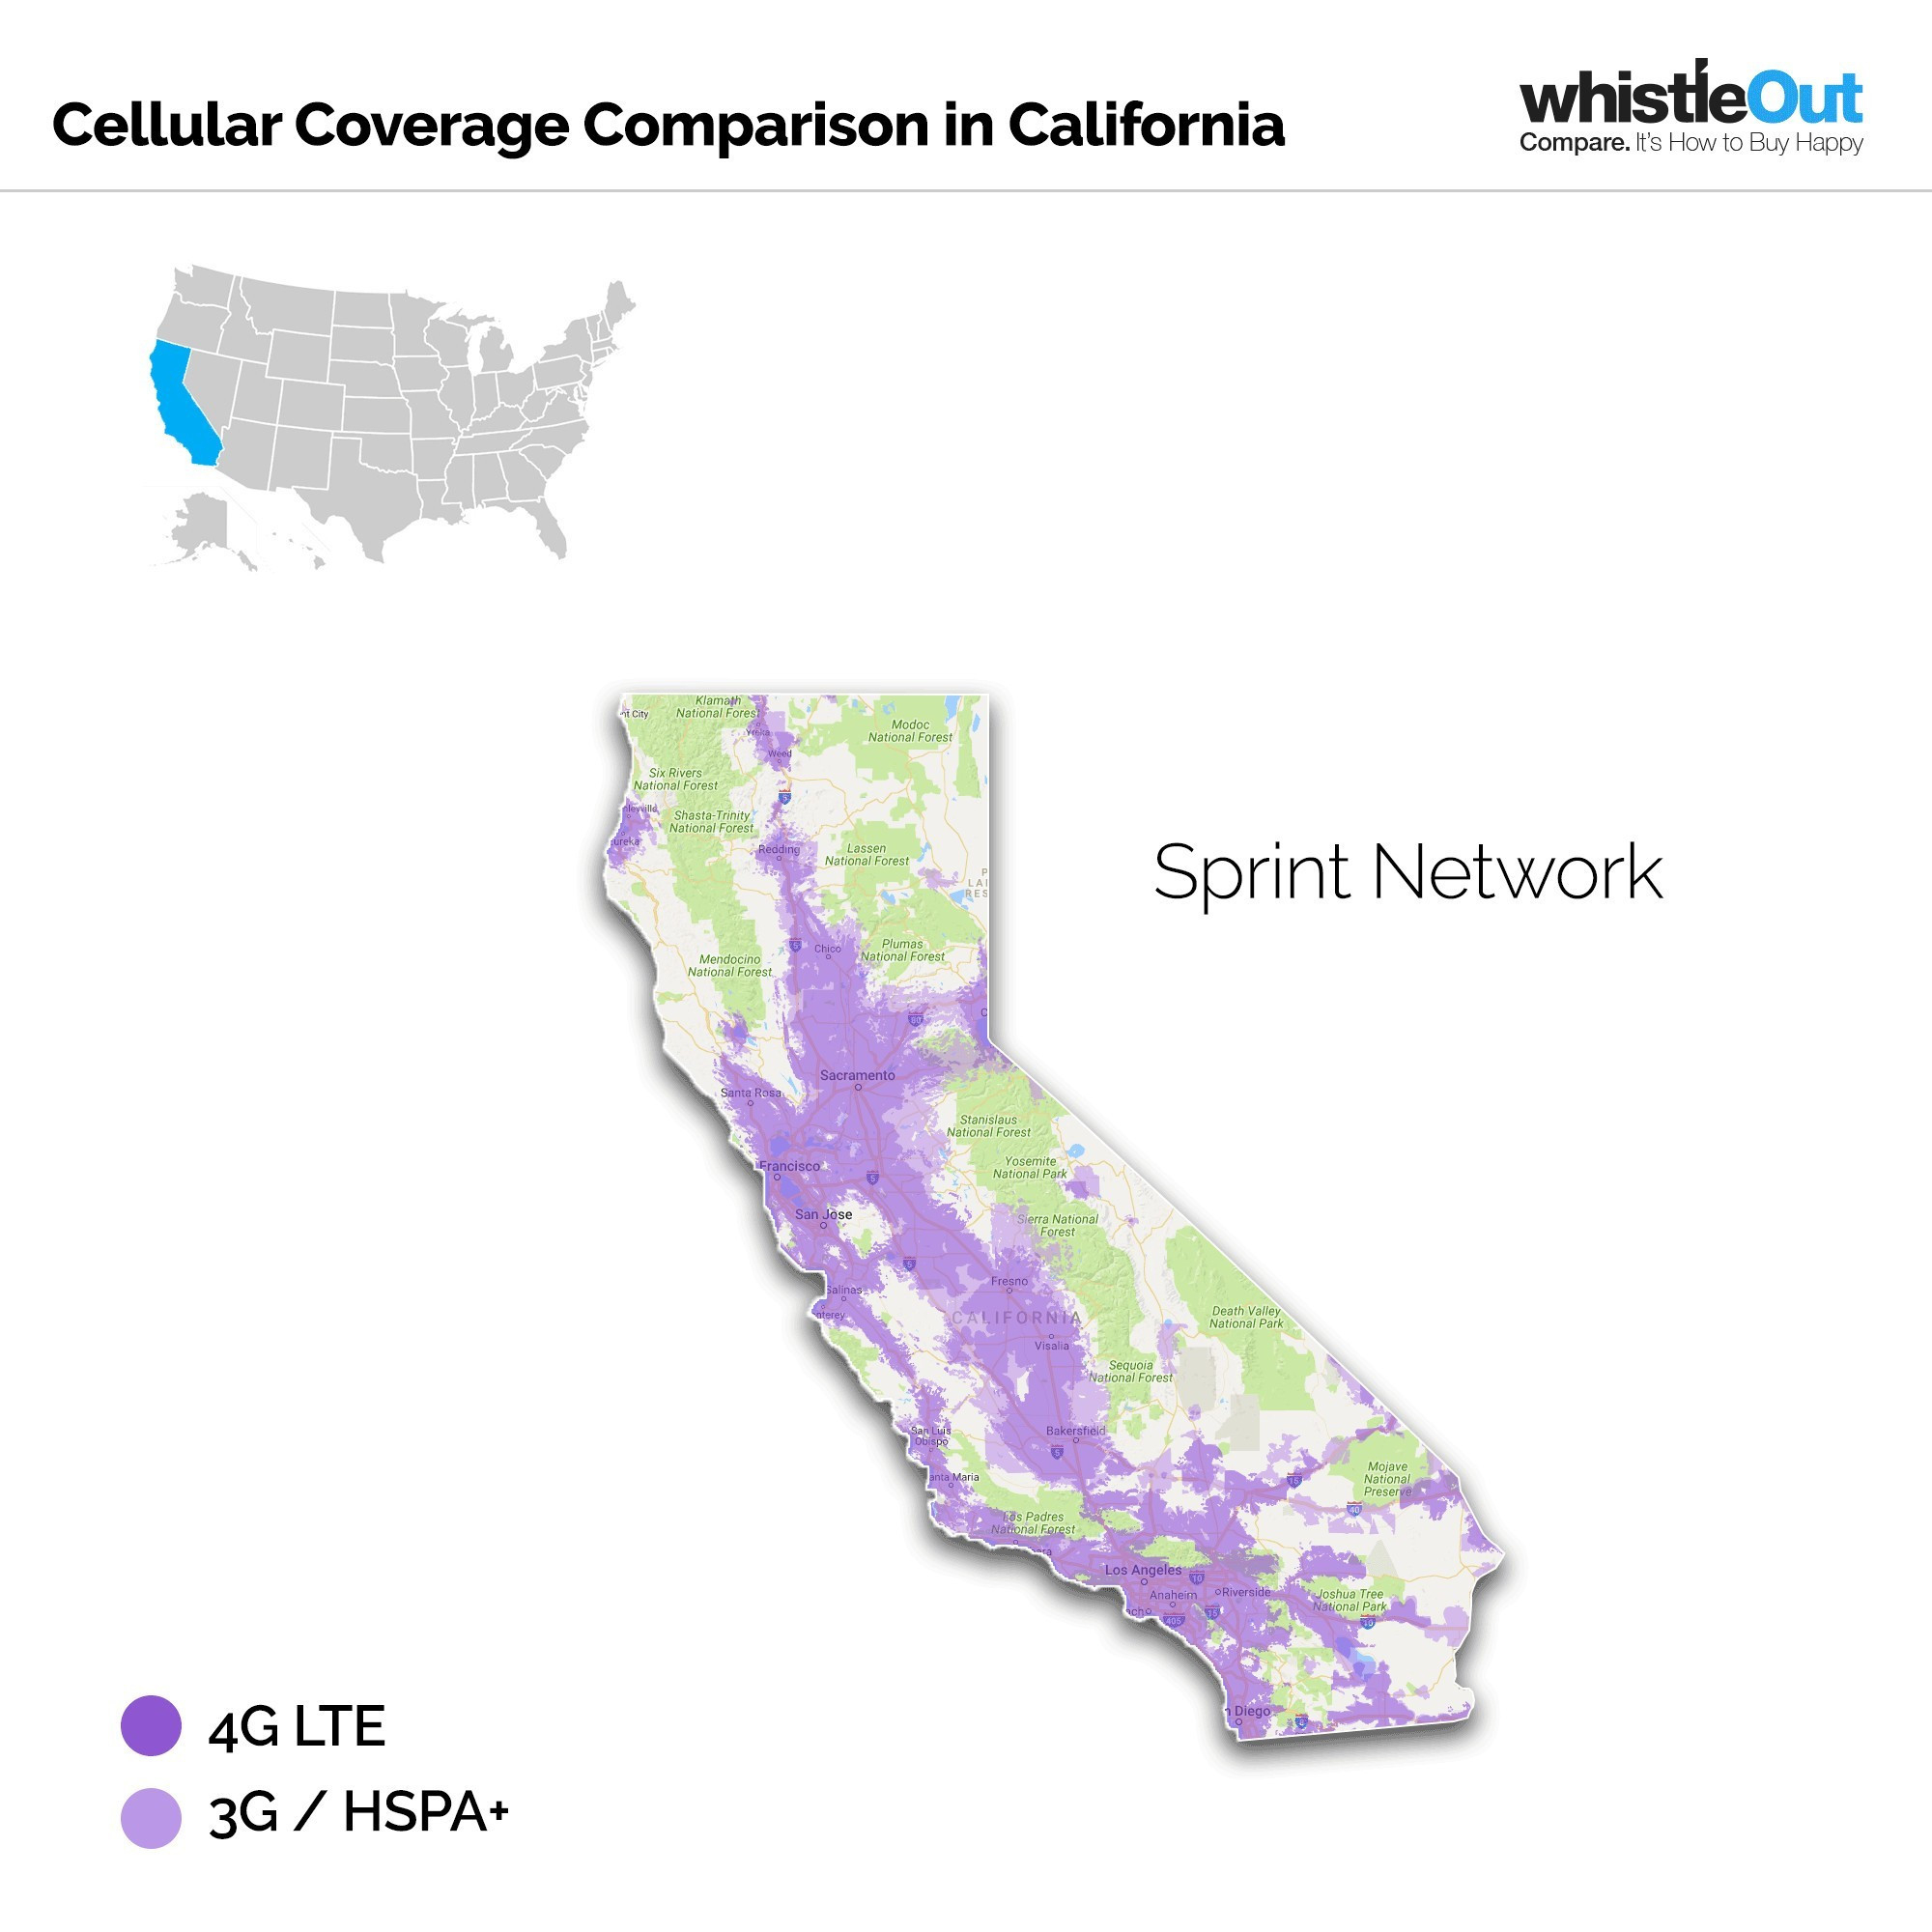 Sprint Us Coverage Map 2016 Mt7M4Iv Inspirational Sprint Coverage - Sprint Coverage Map California